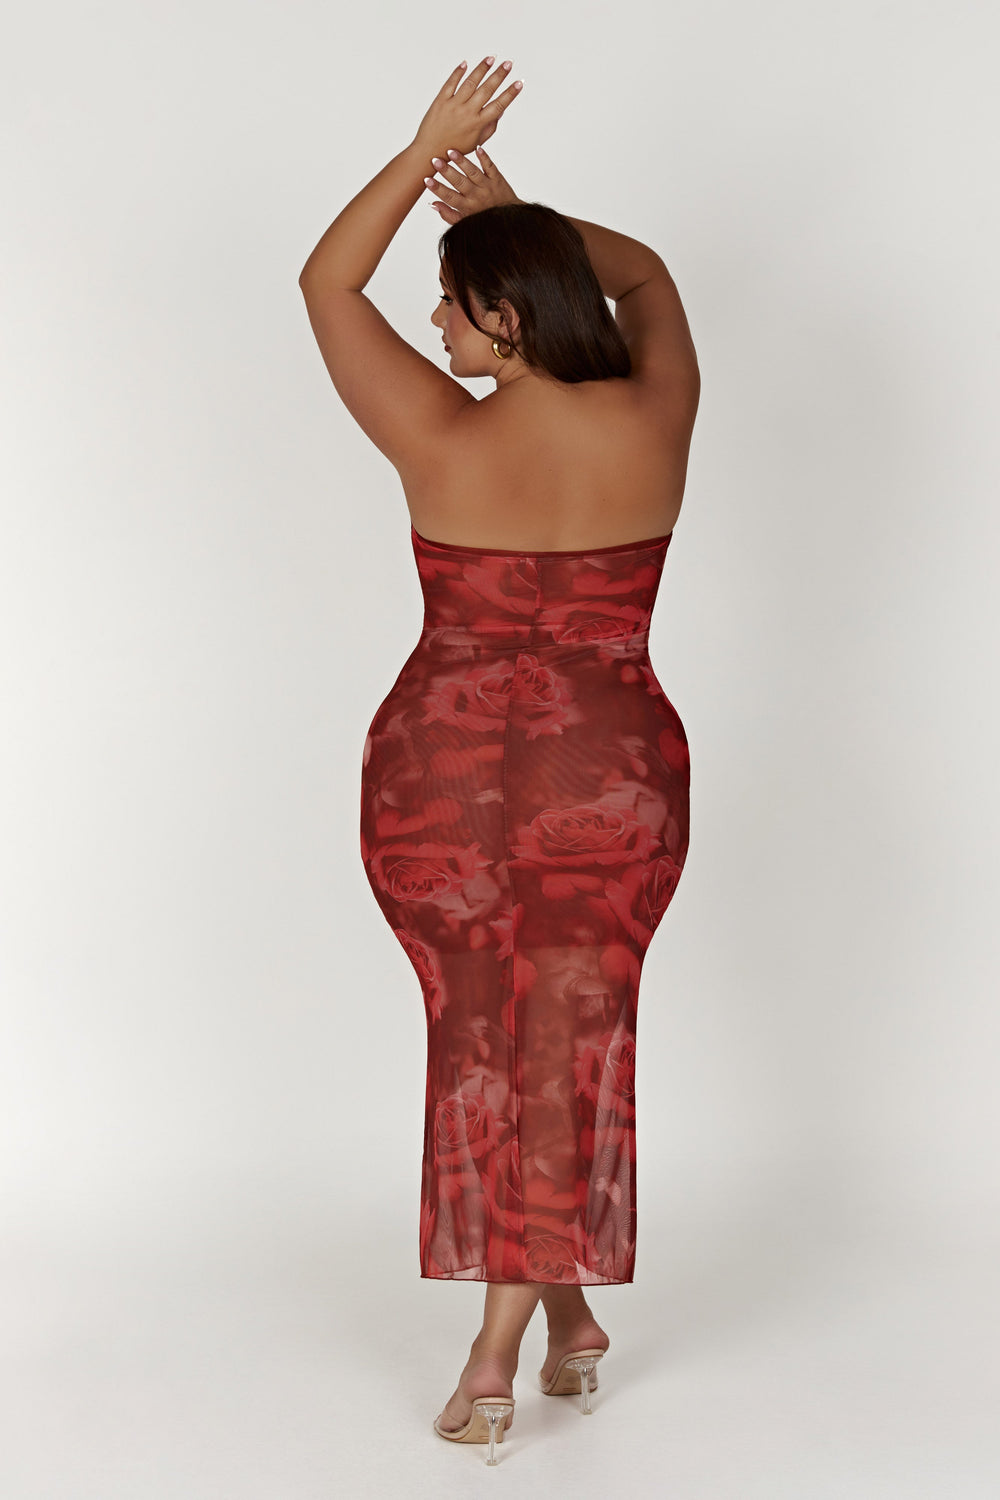 Aphrodite Strapless Mesh Dress - Oversized Rose Print